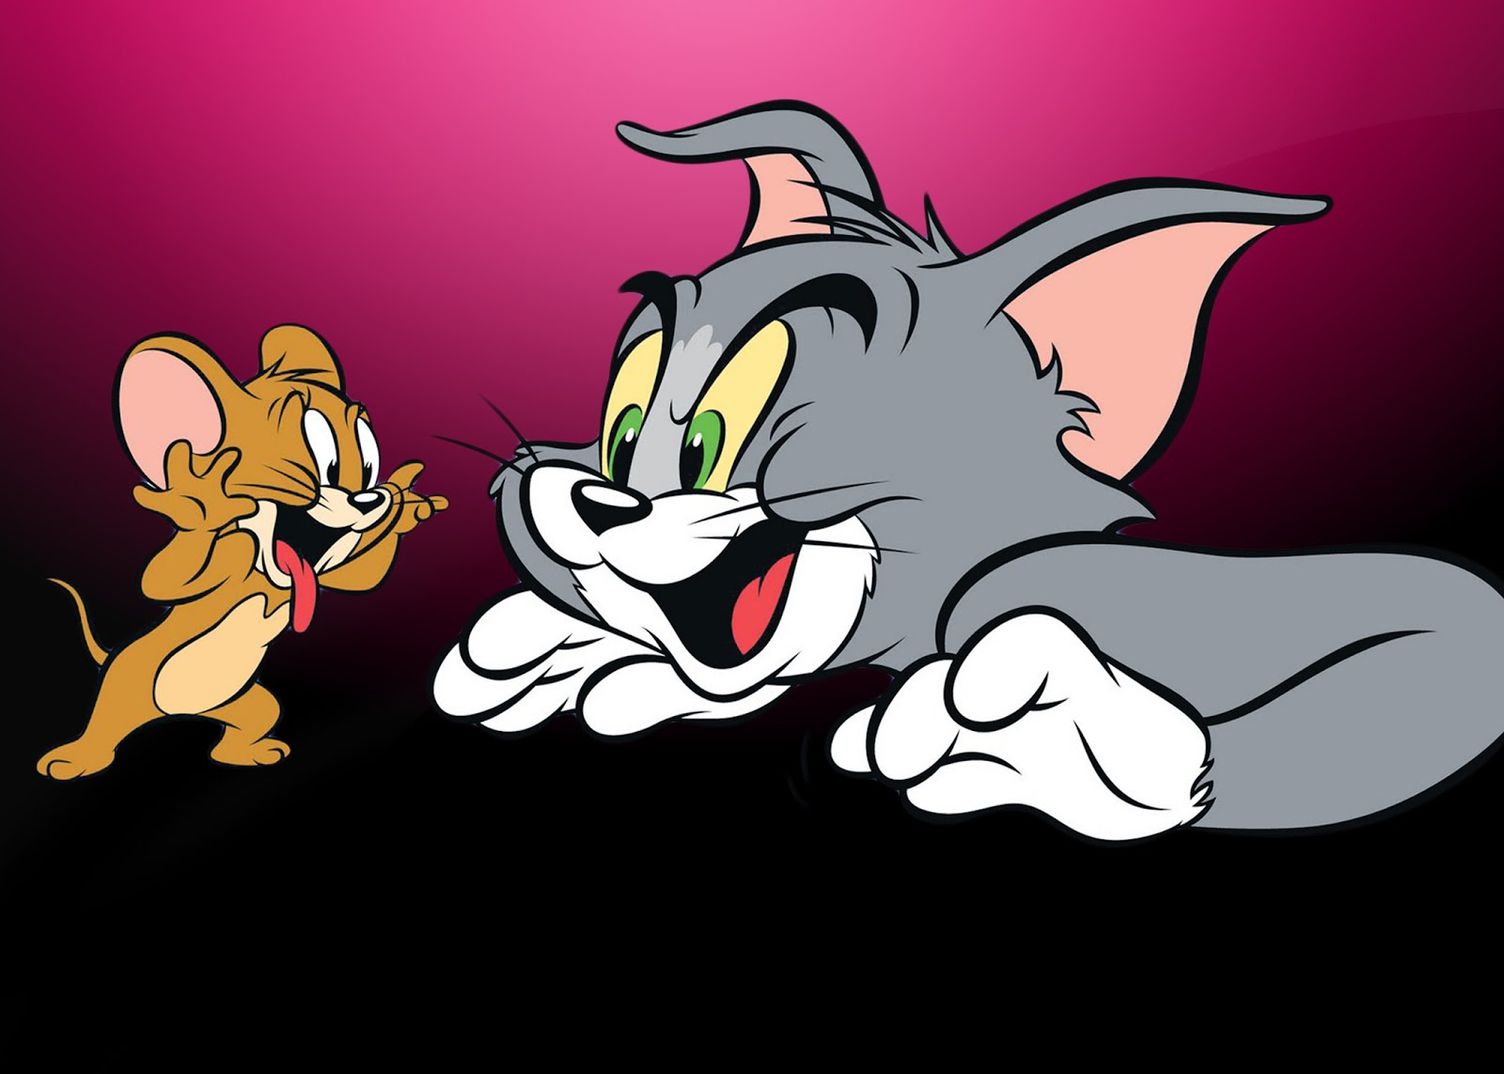 Tom i drink. Tom and Jerry. Том и Джерри Tom and Jerry.